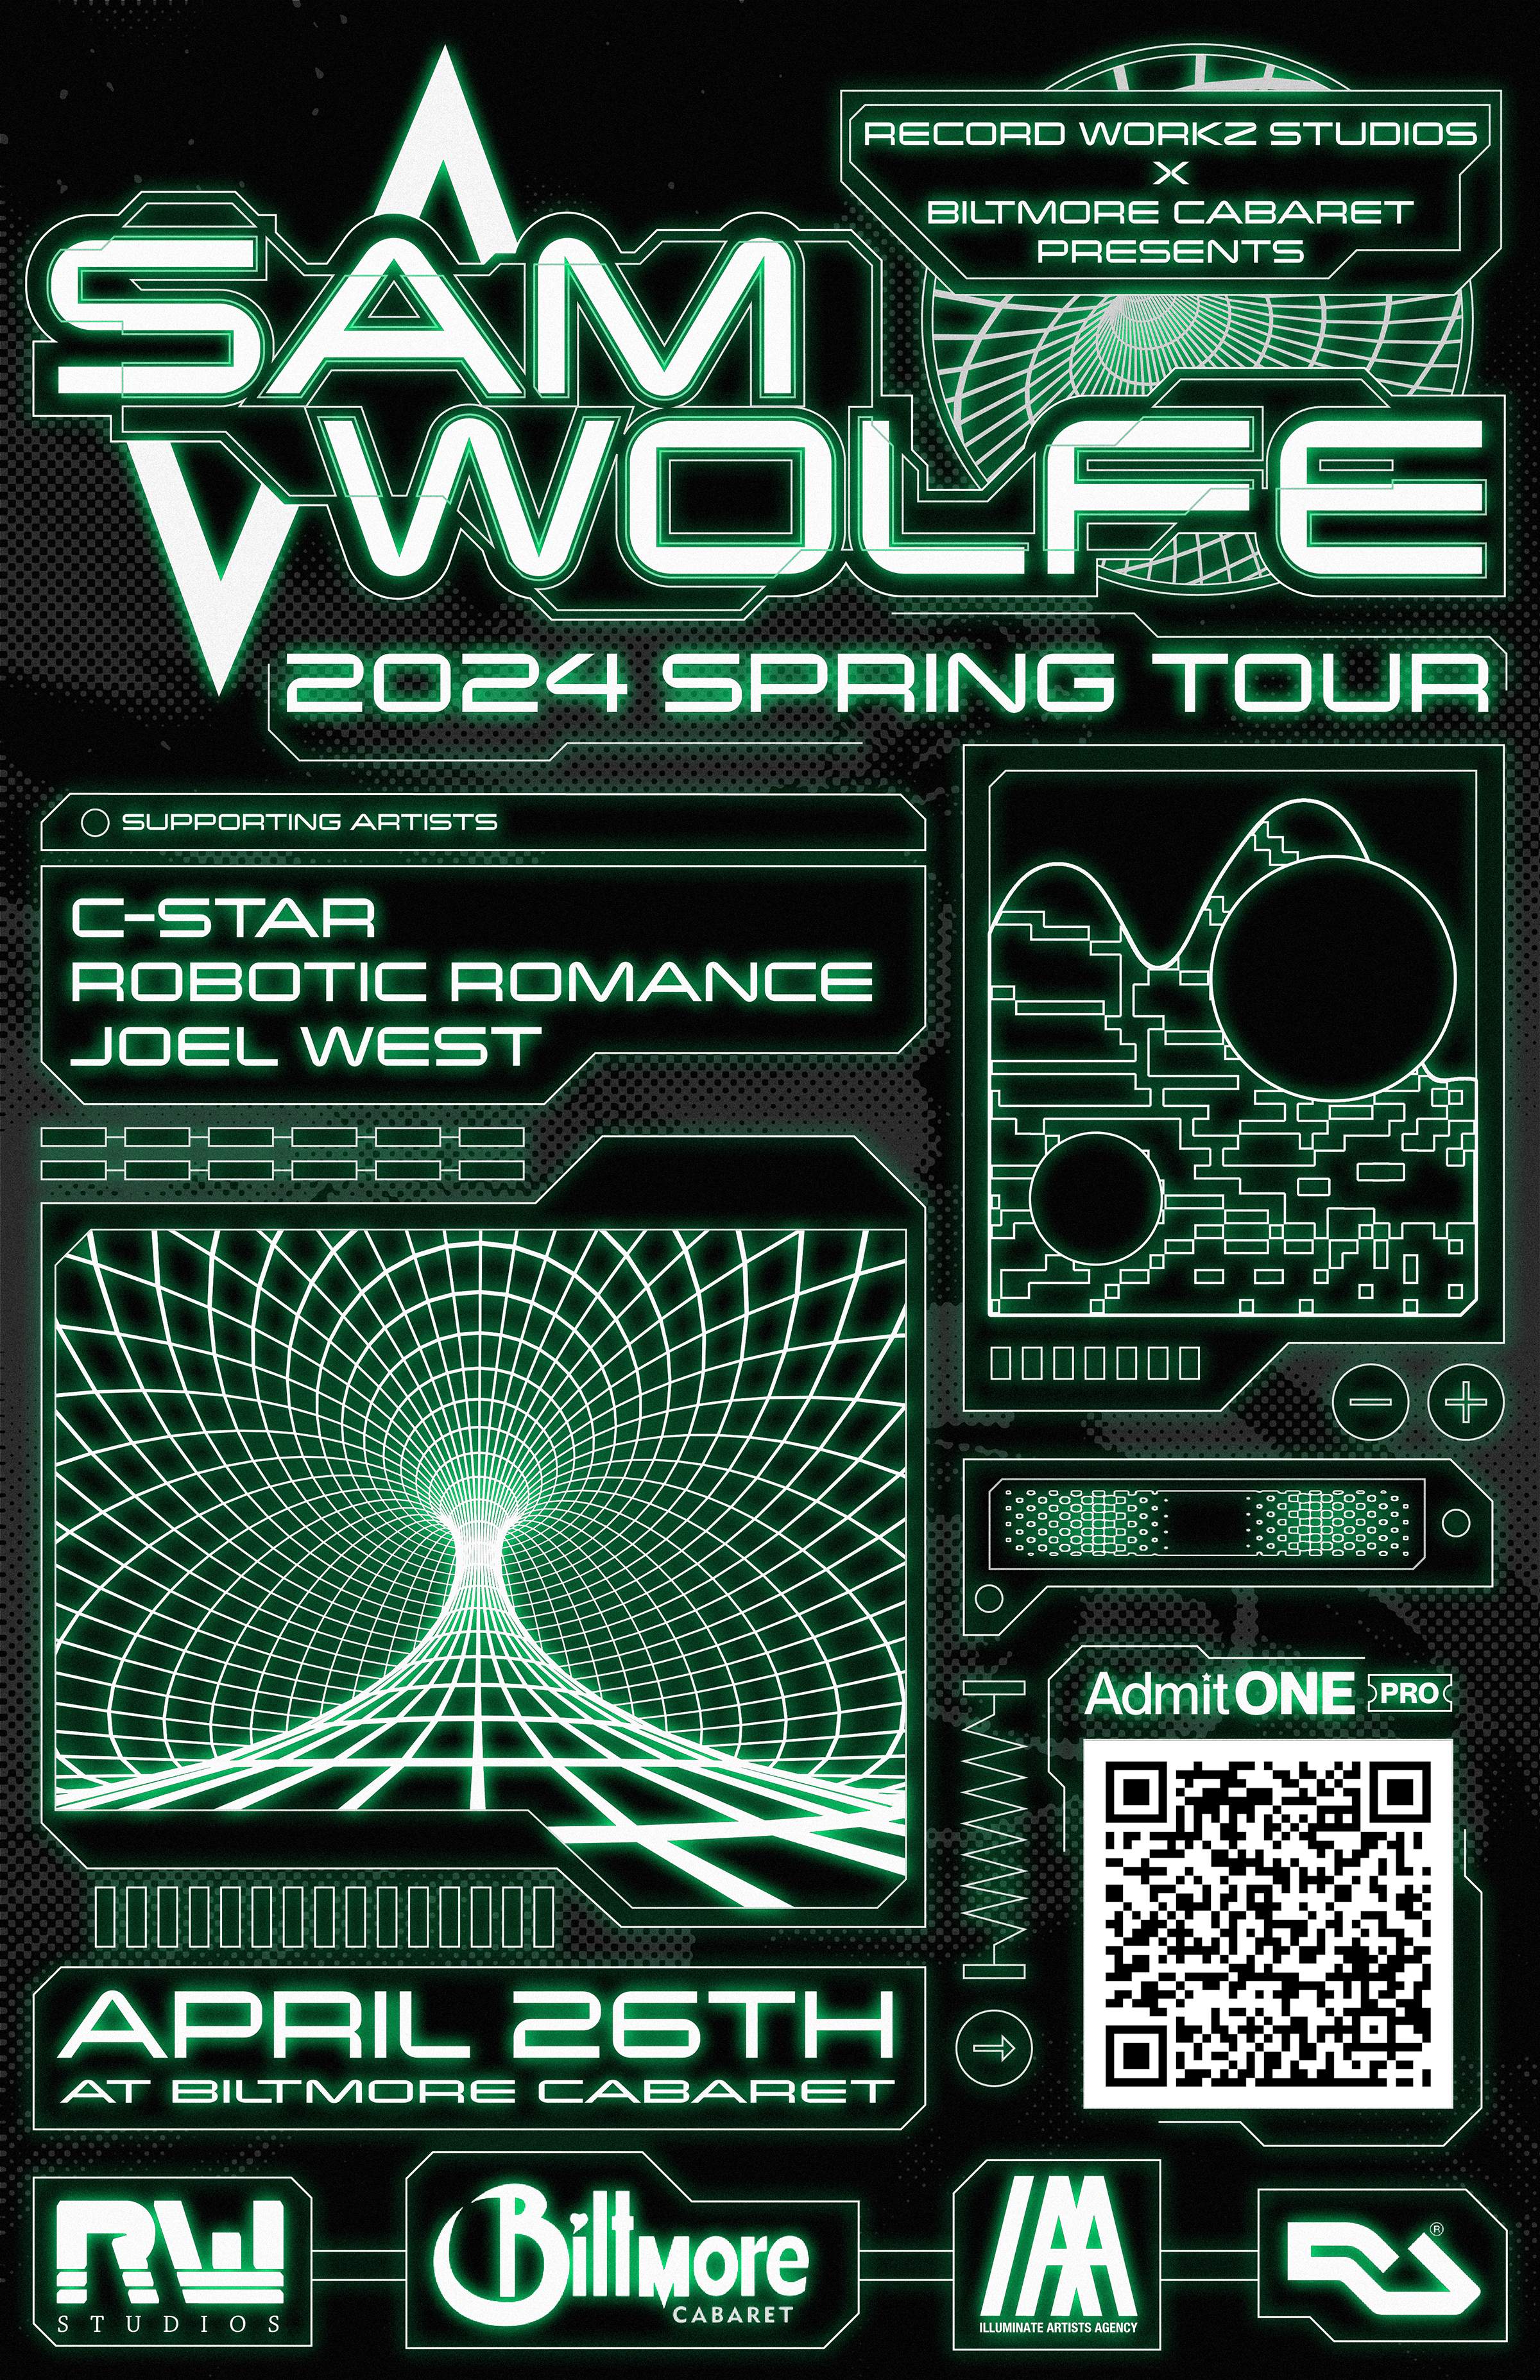 RWS x Biltmore Cabaret presents: Sam Wolfe - C-Star - Robotic Romance - Joel West: - Página frontal